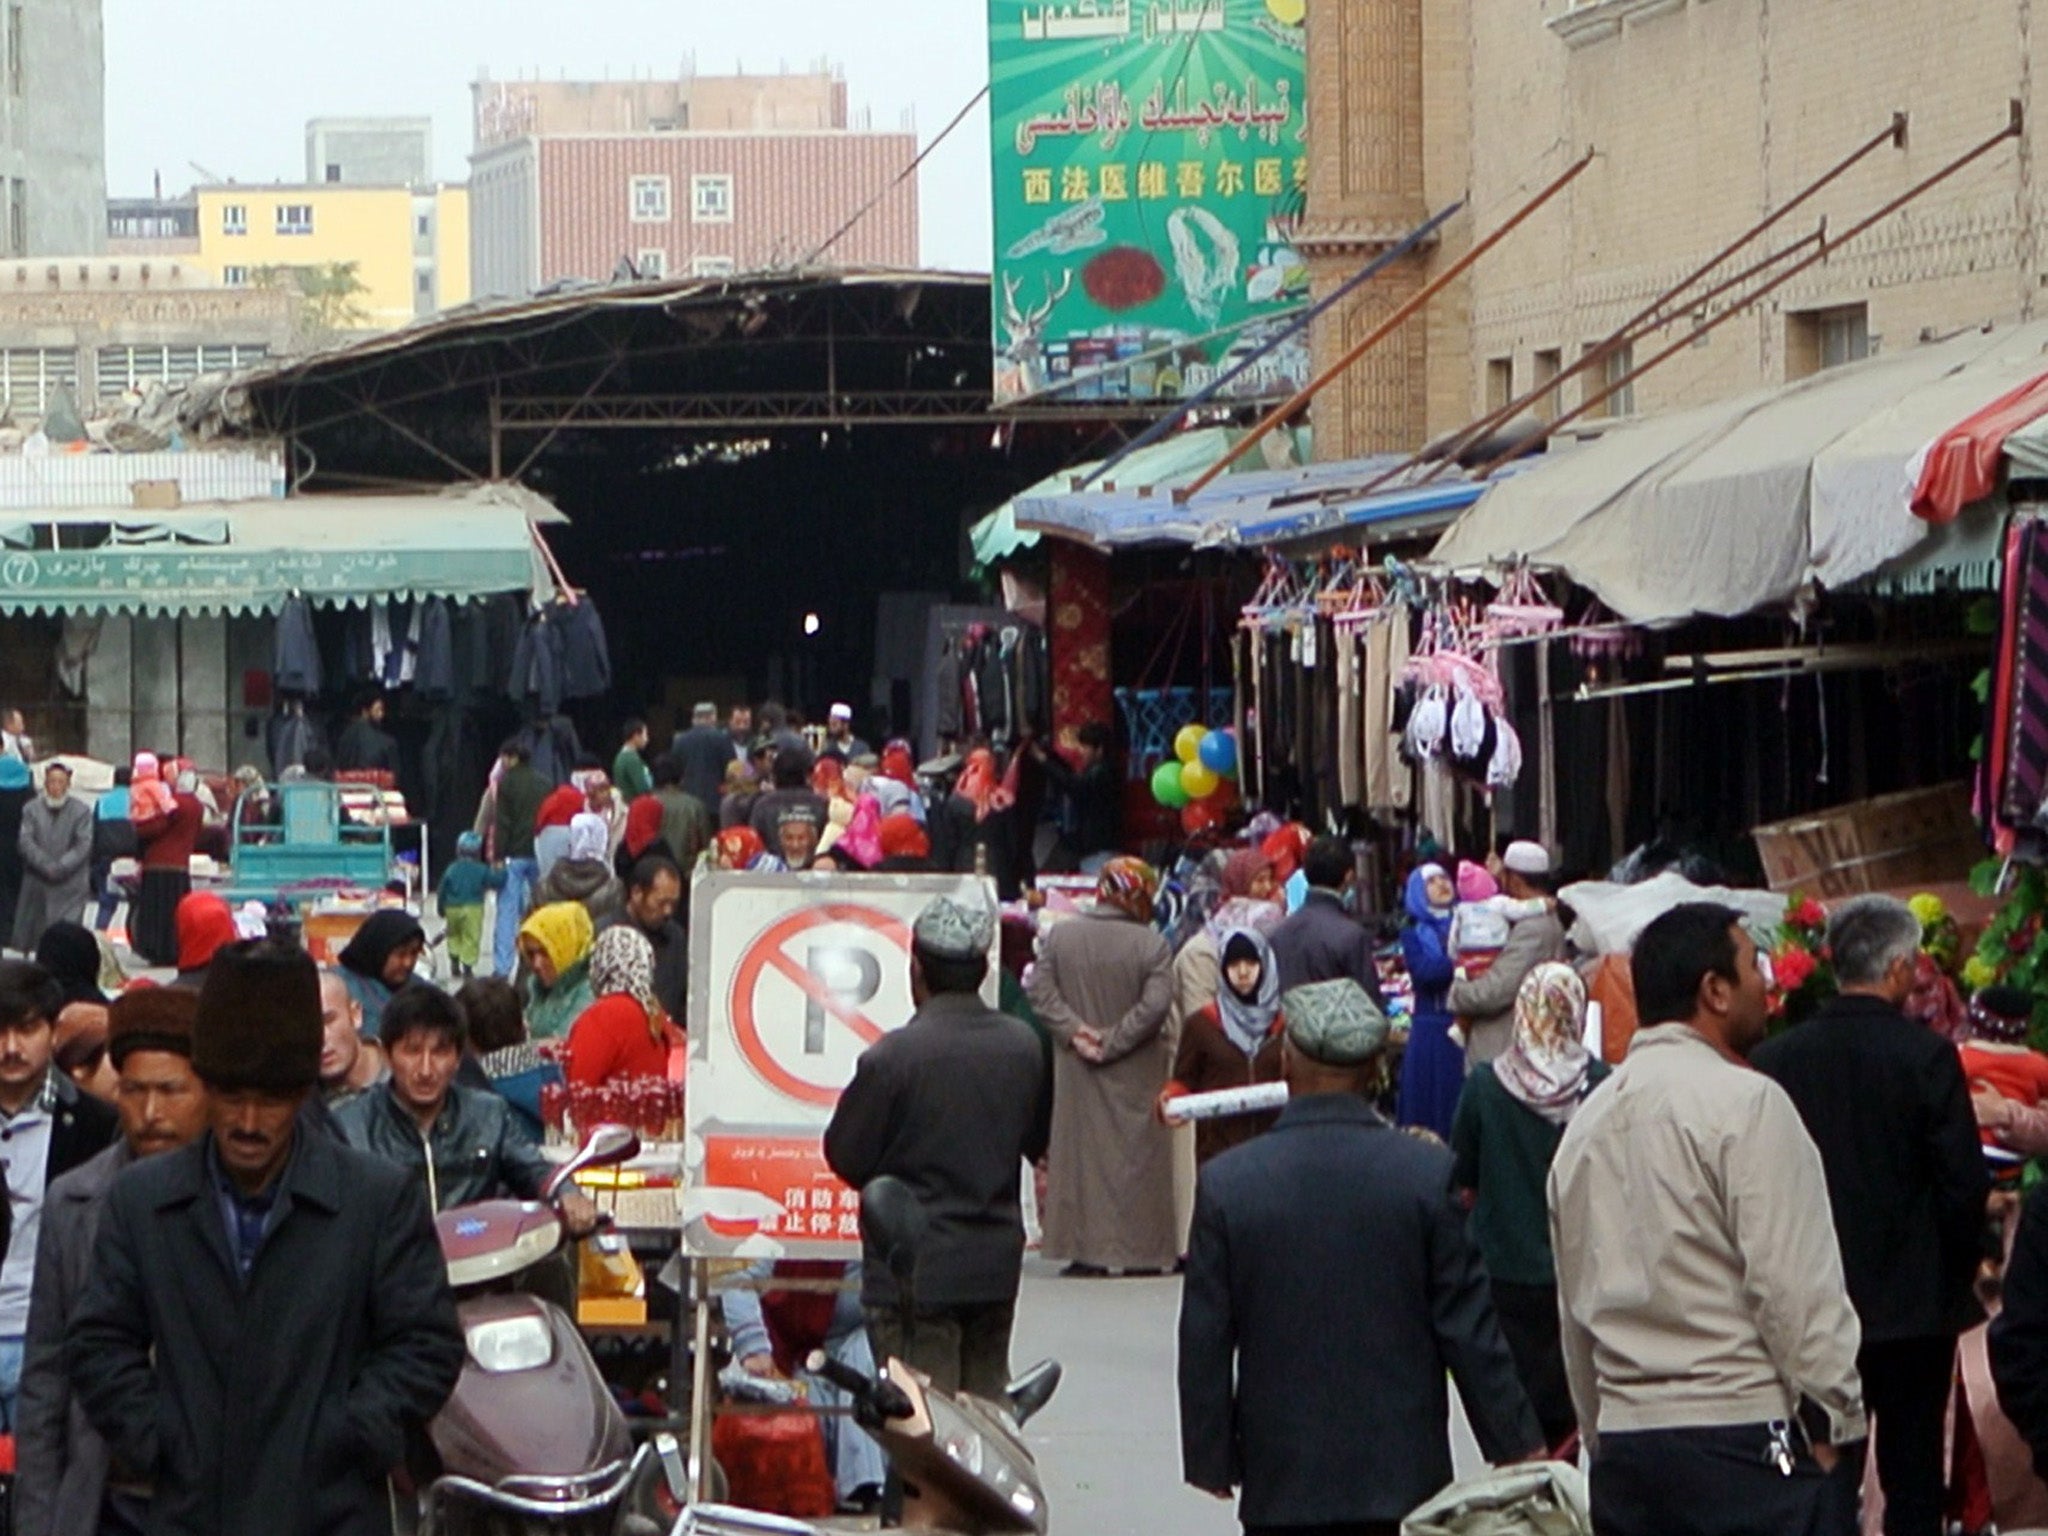 A crowd of mainly Uighur shop at a bazaar in China's Xinjiang region